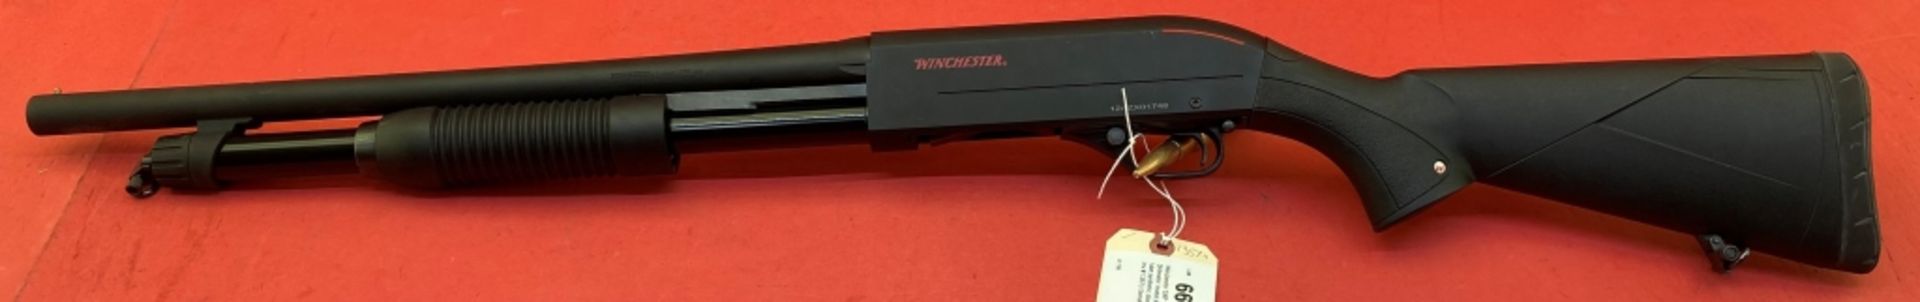 Winchester SXP 12 ga 3"" Shotgun - Image 9 of 9